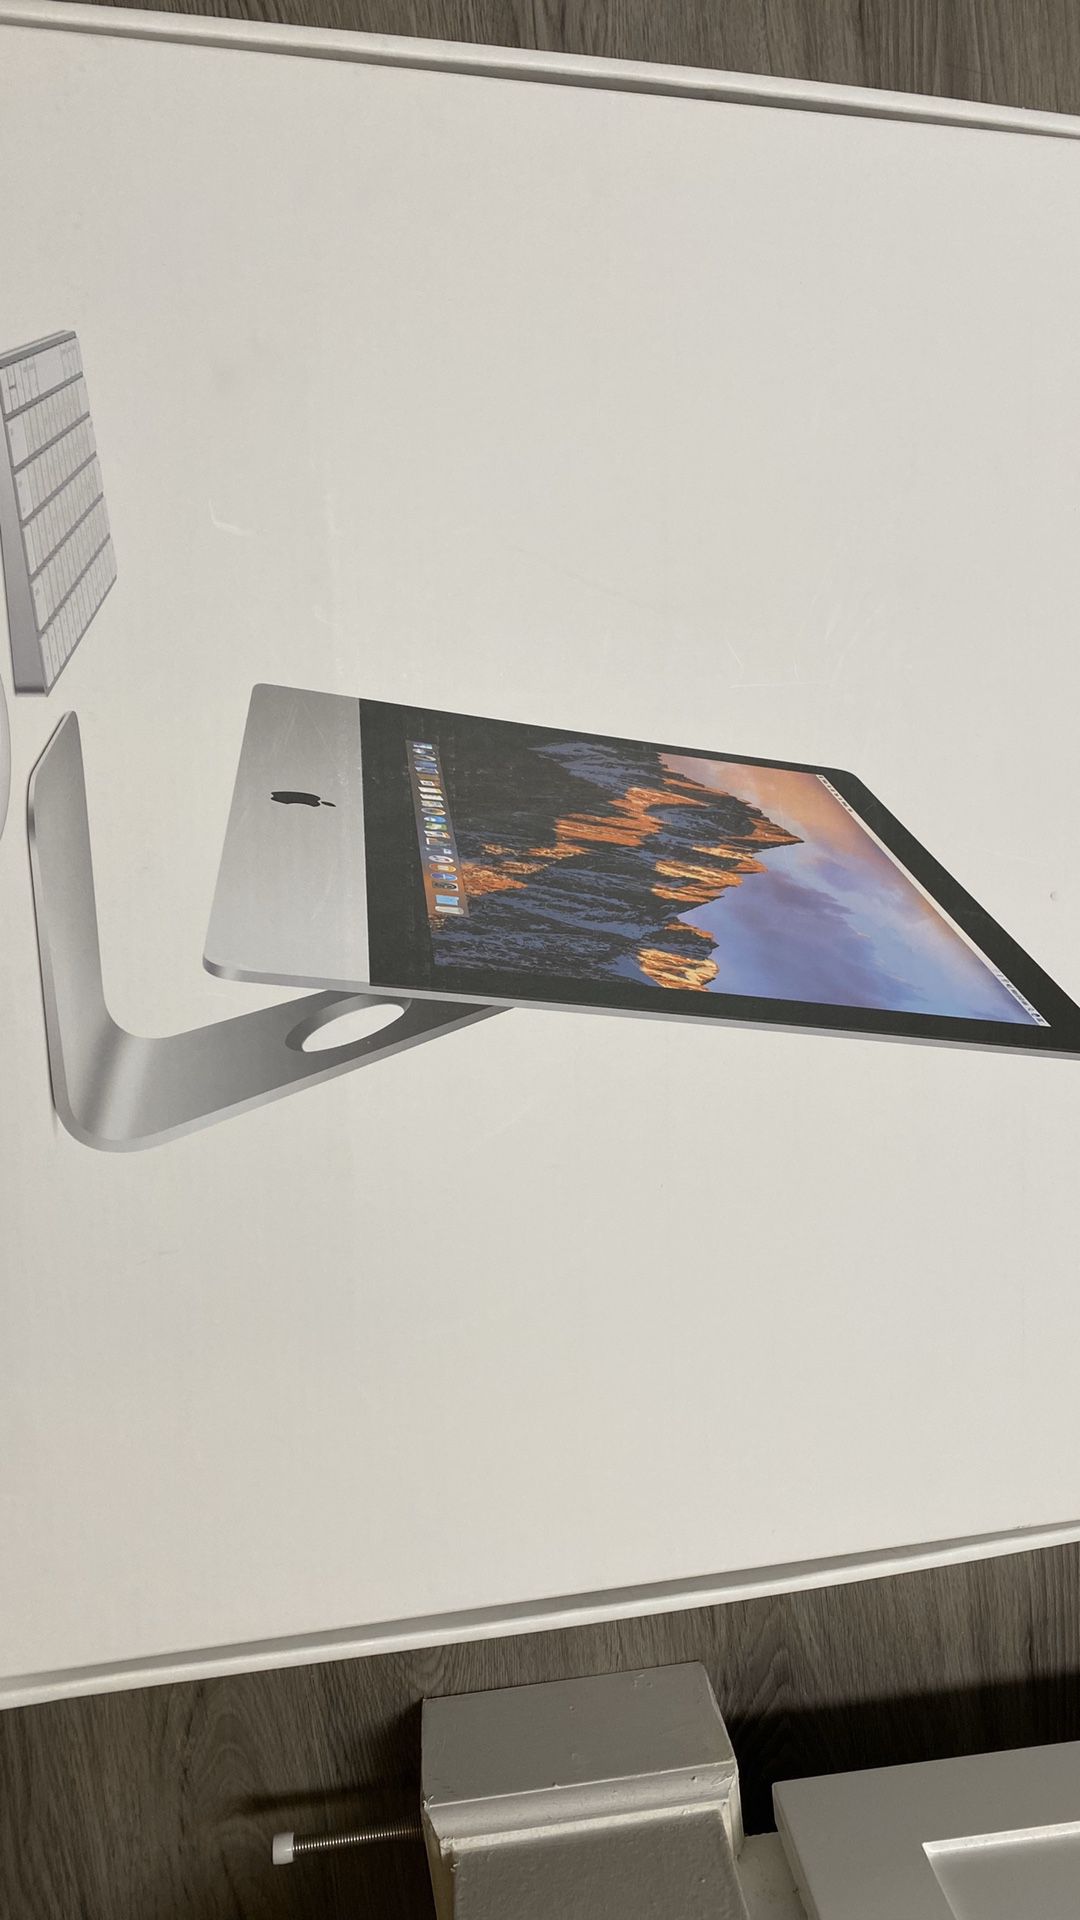 21.5 inch iMac 2017 model LIKE NEW